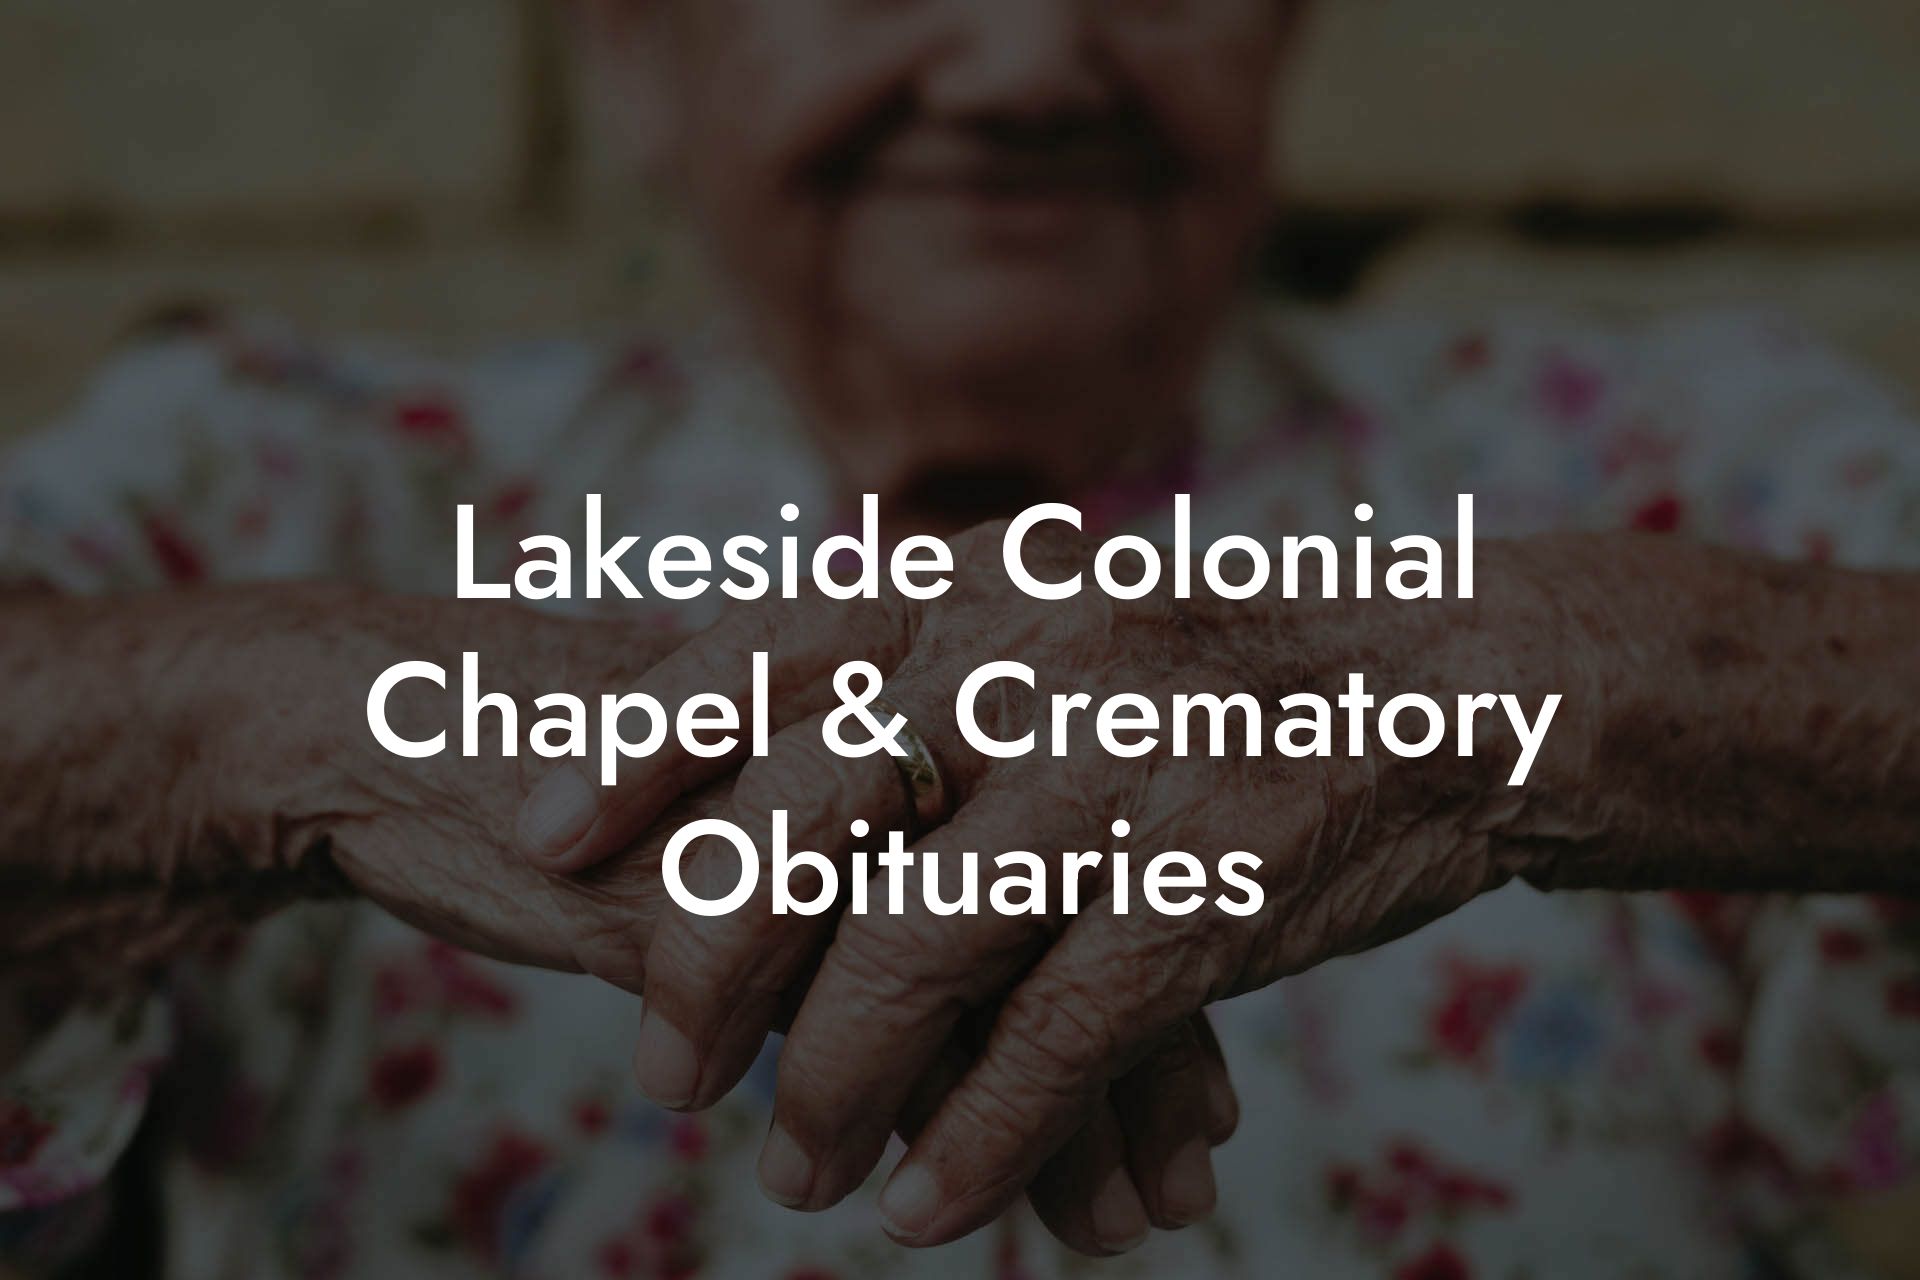 Lakeside Colonial Chapel & Crematory Obituaries